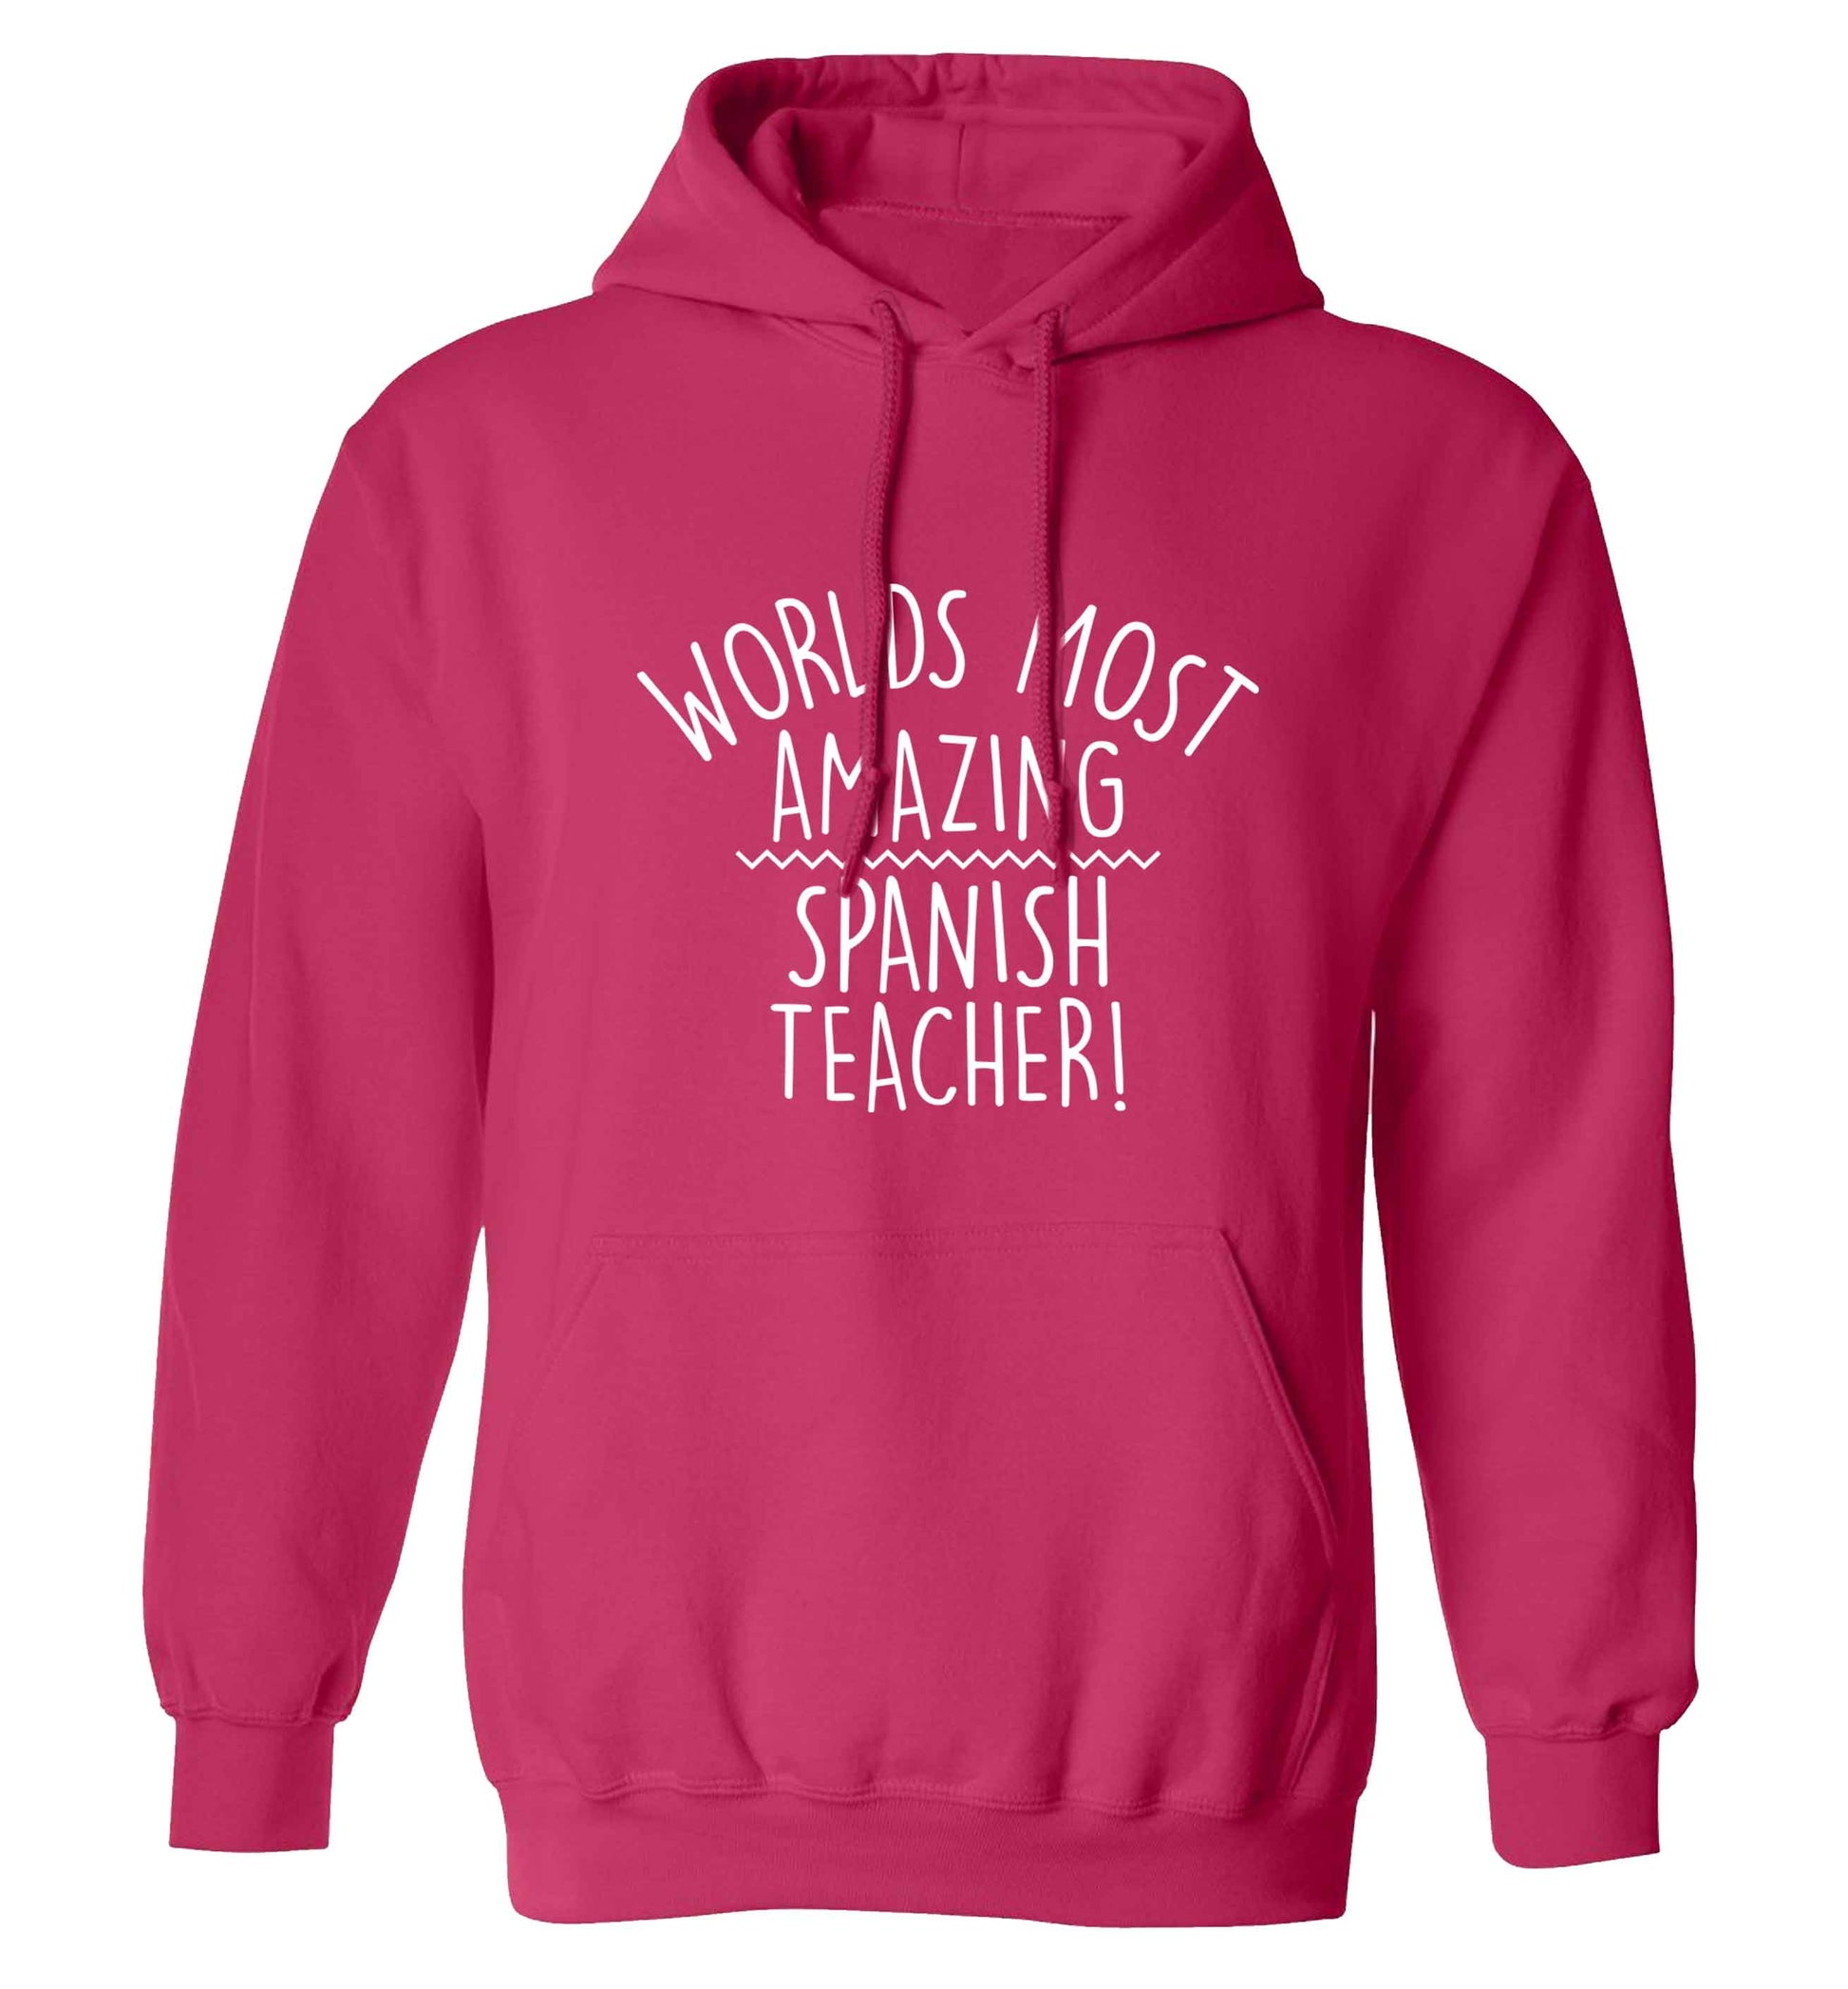 Worlds most amazing Spanish teacher adults unisex pink hoodie 2XL